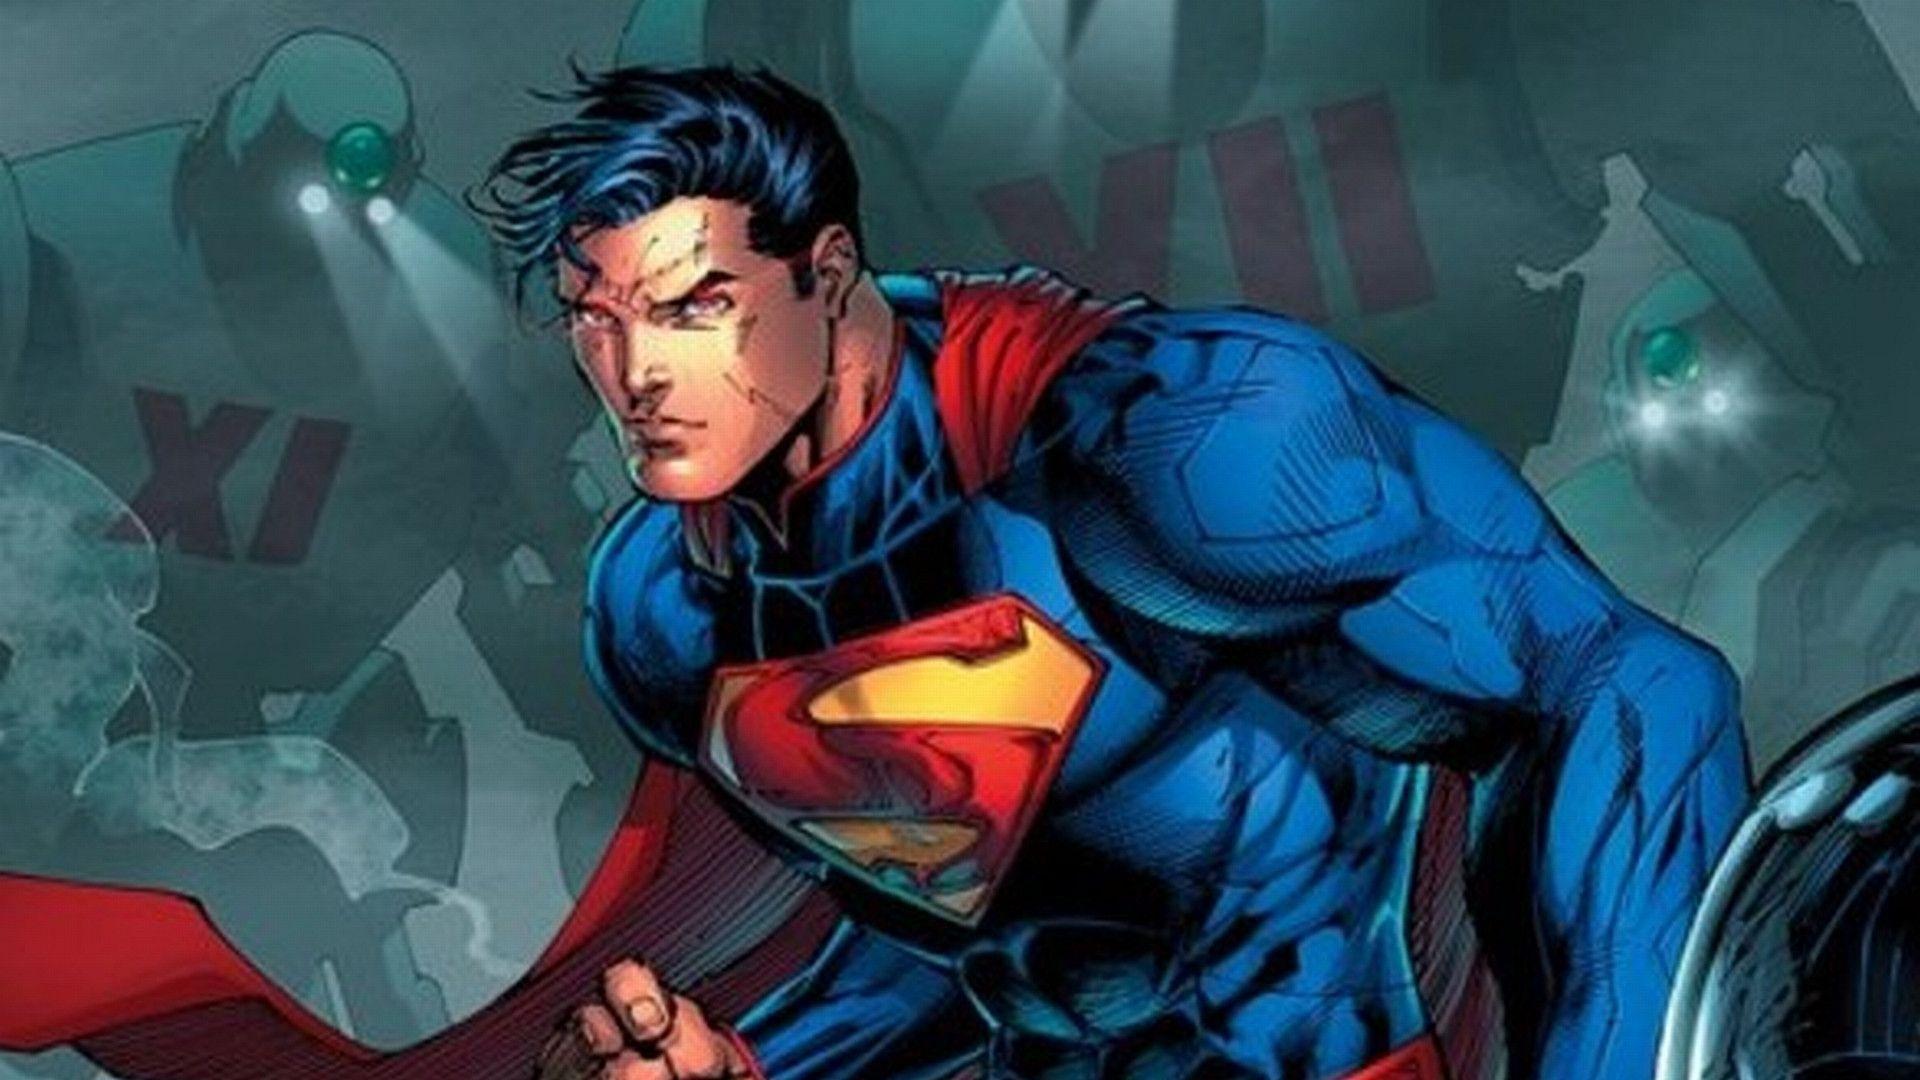 Superman Comic Wallpaper Free For iPhone